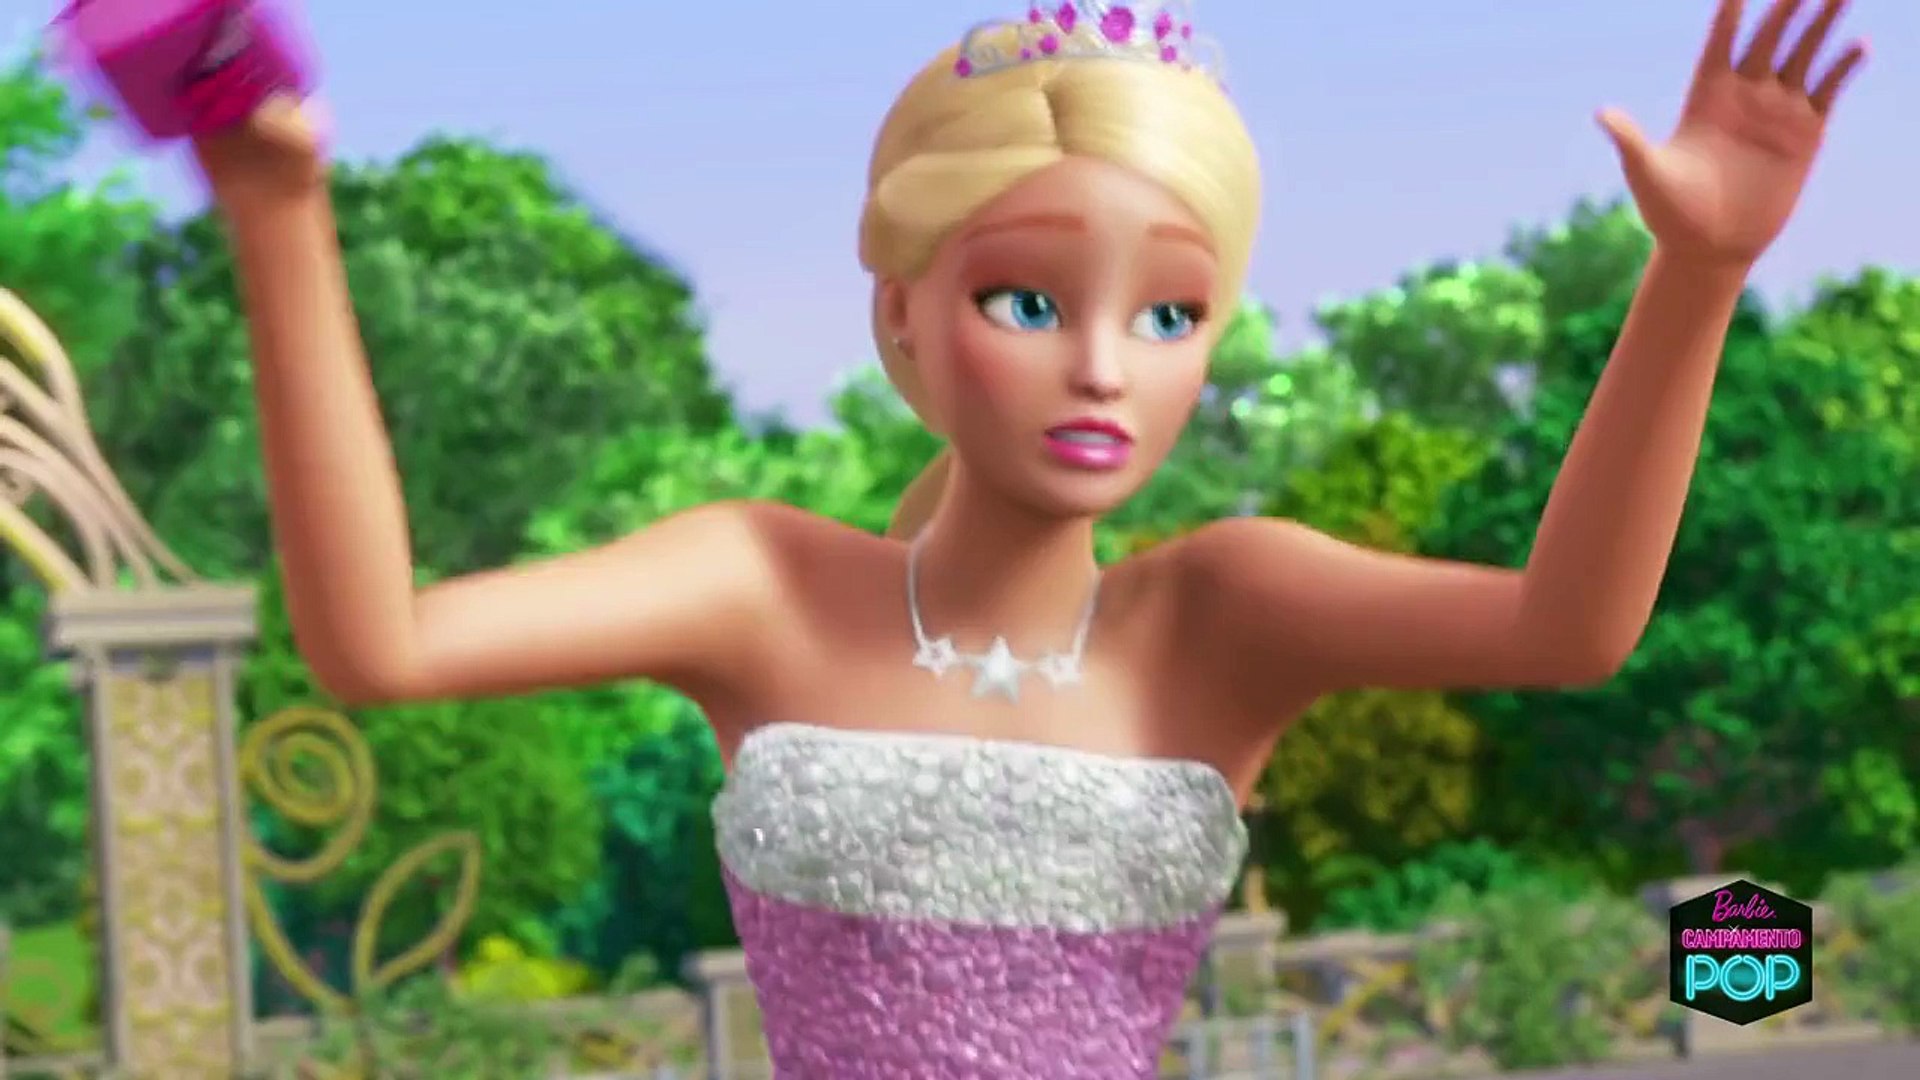 Trailer Barbie Campamento Pop - Dailymotion Video